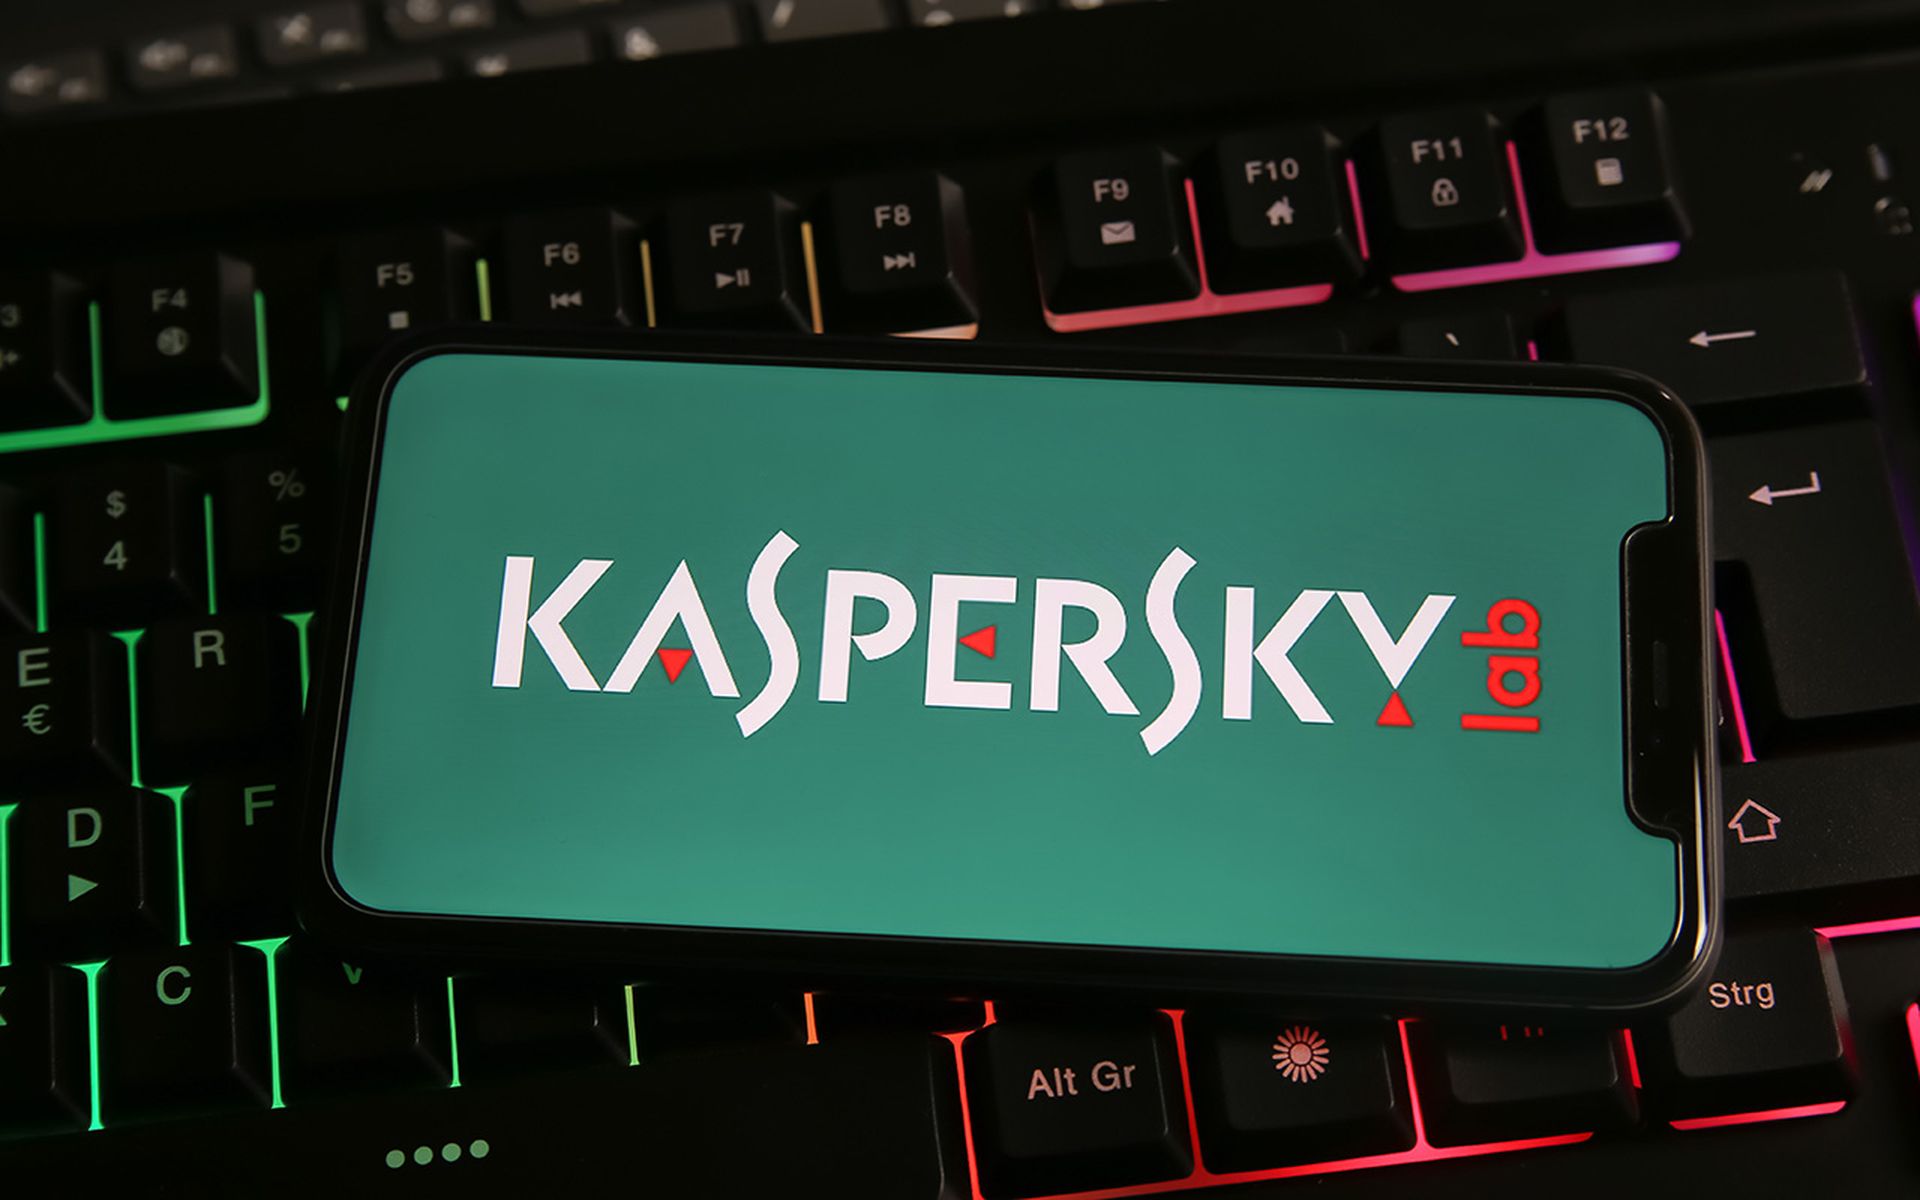 The Kaspersky ban